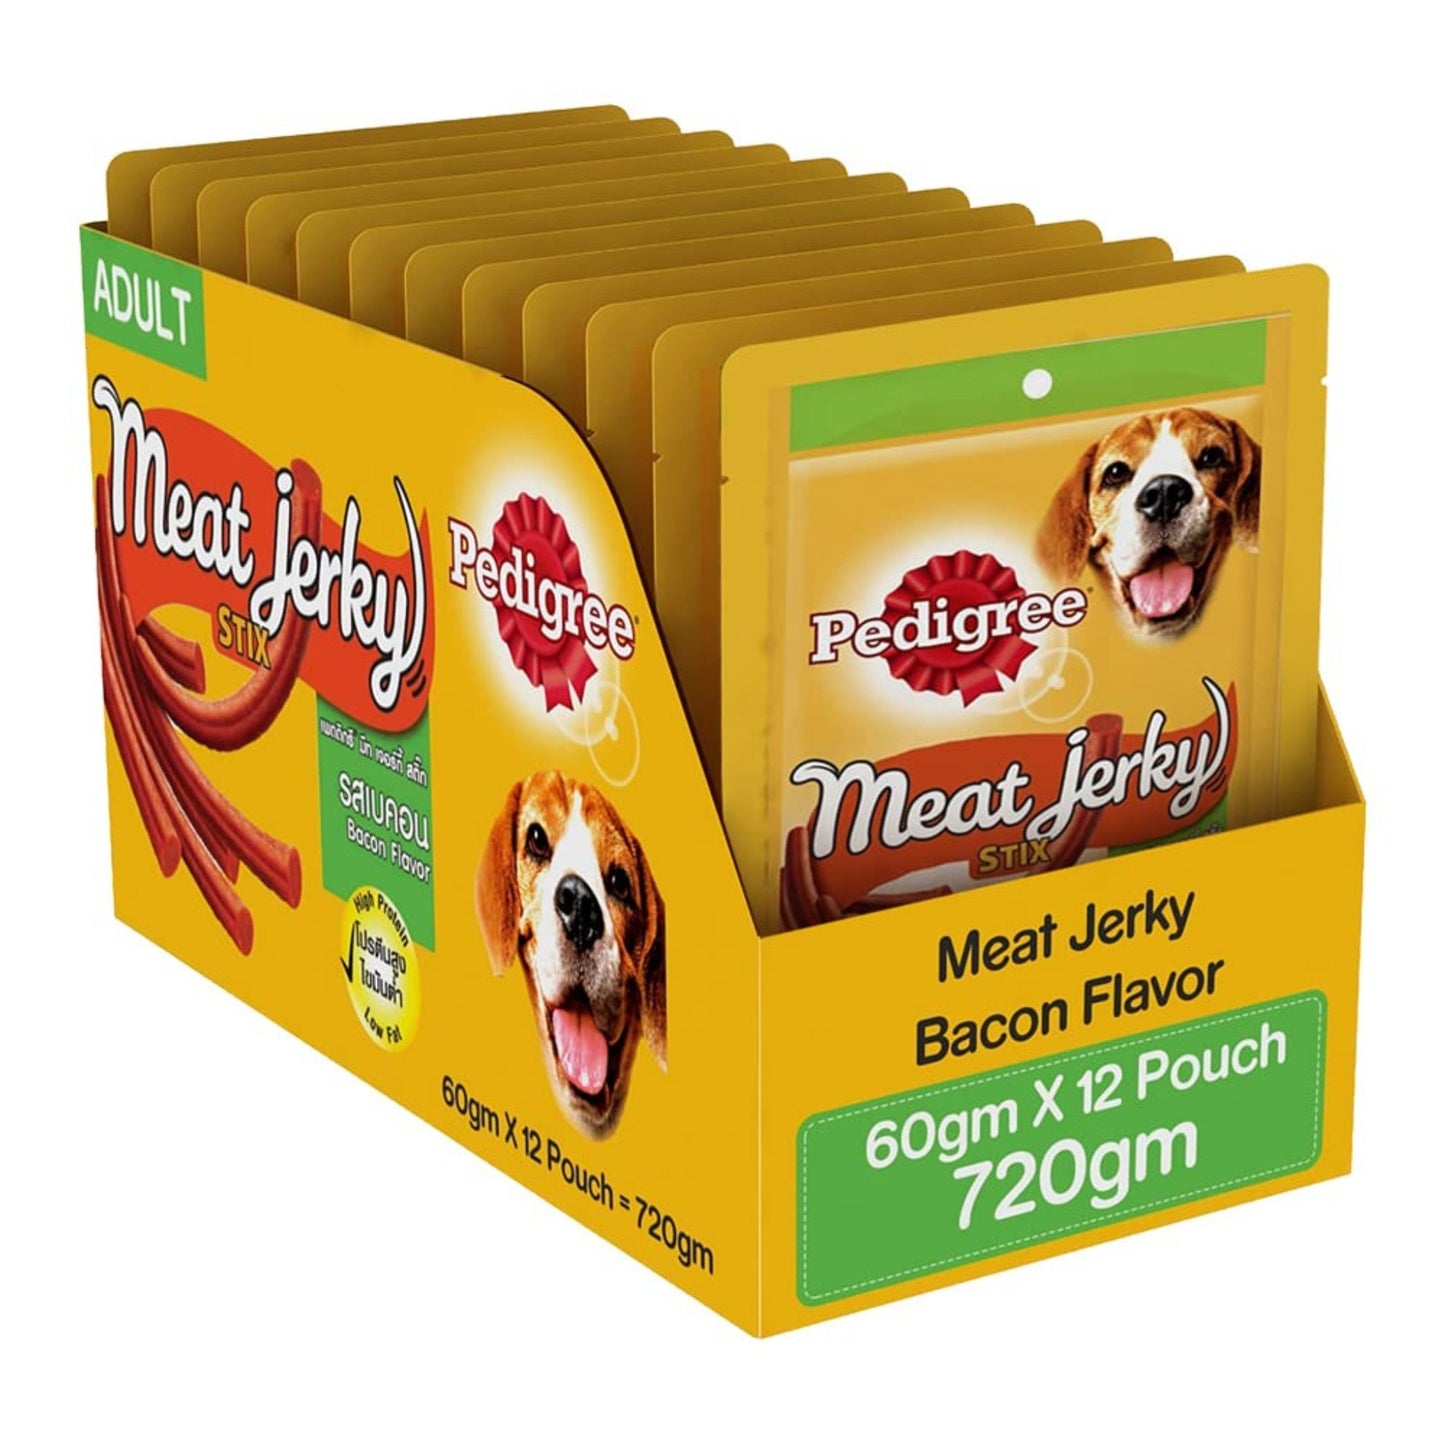 Pedigree Meat Jerky Bacon Stix Dog Treat - 60gm, Pack of 6